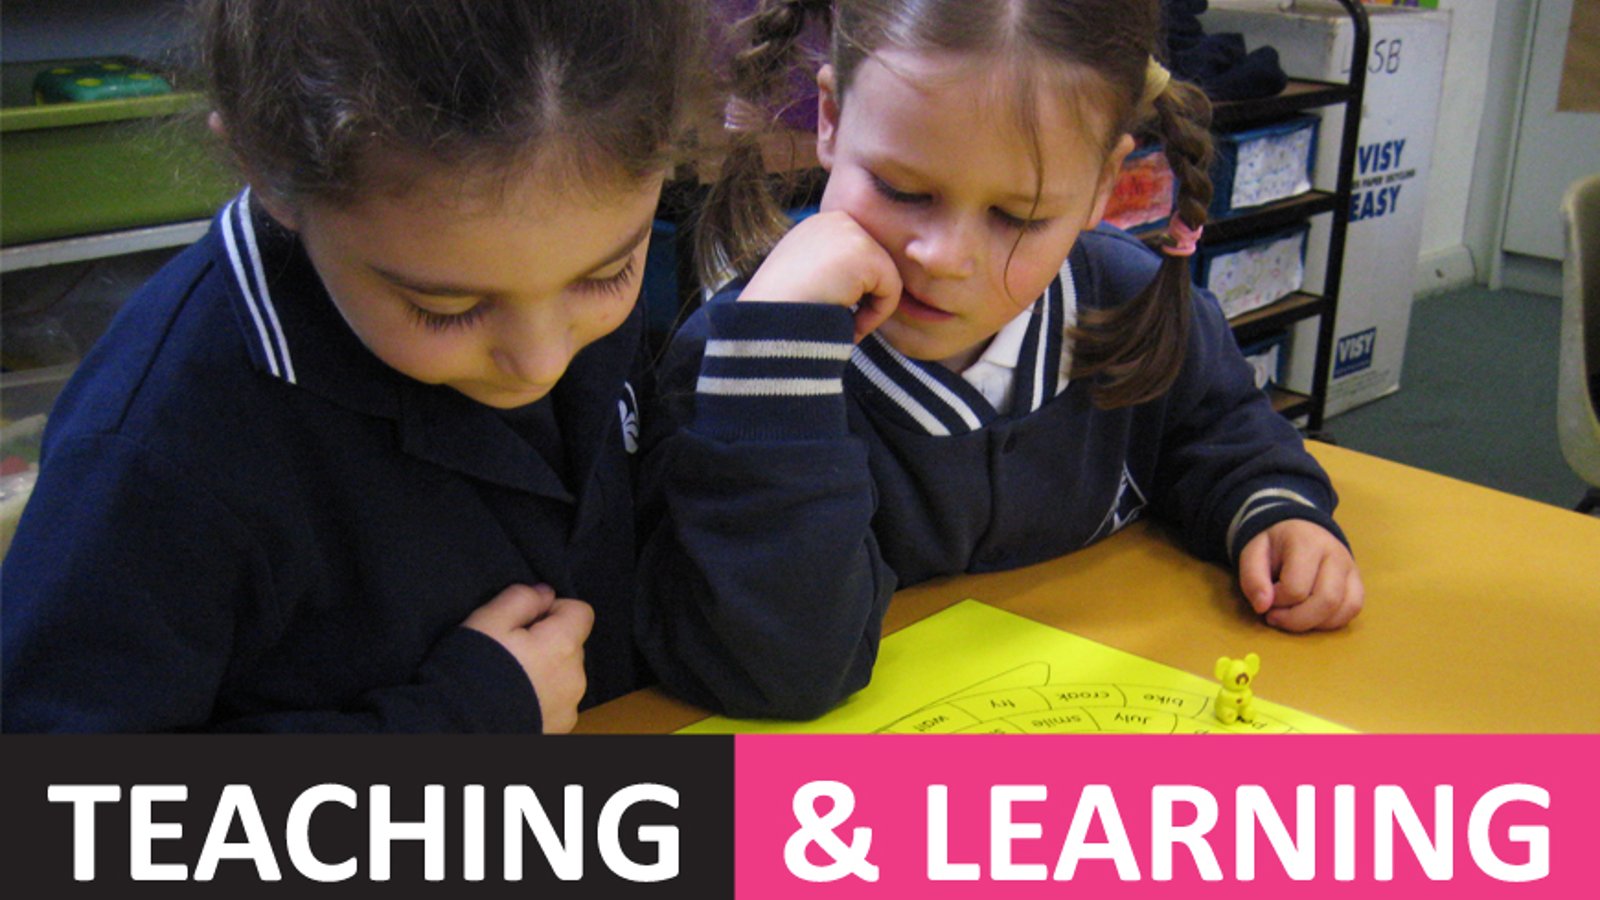 Teaching & Learning: Teaching Numeracy